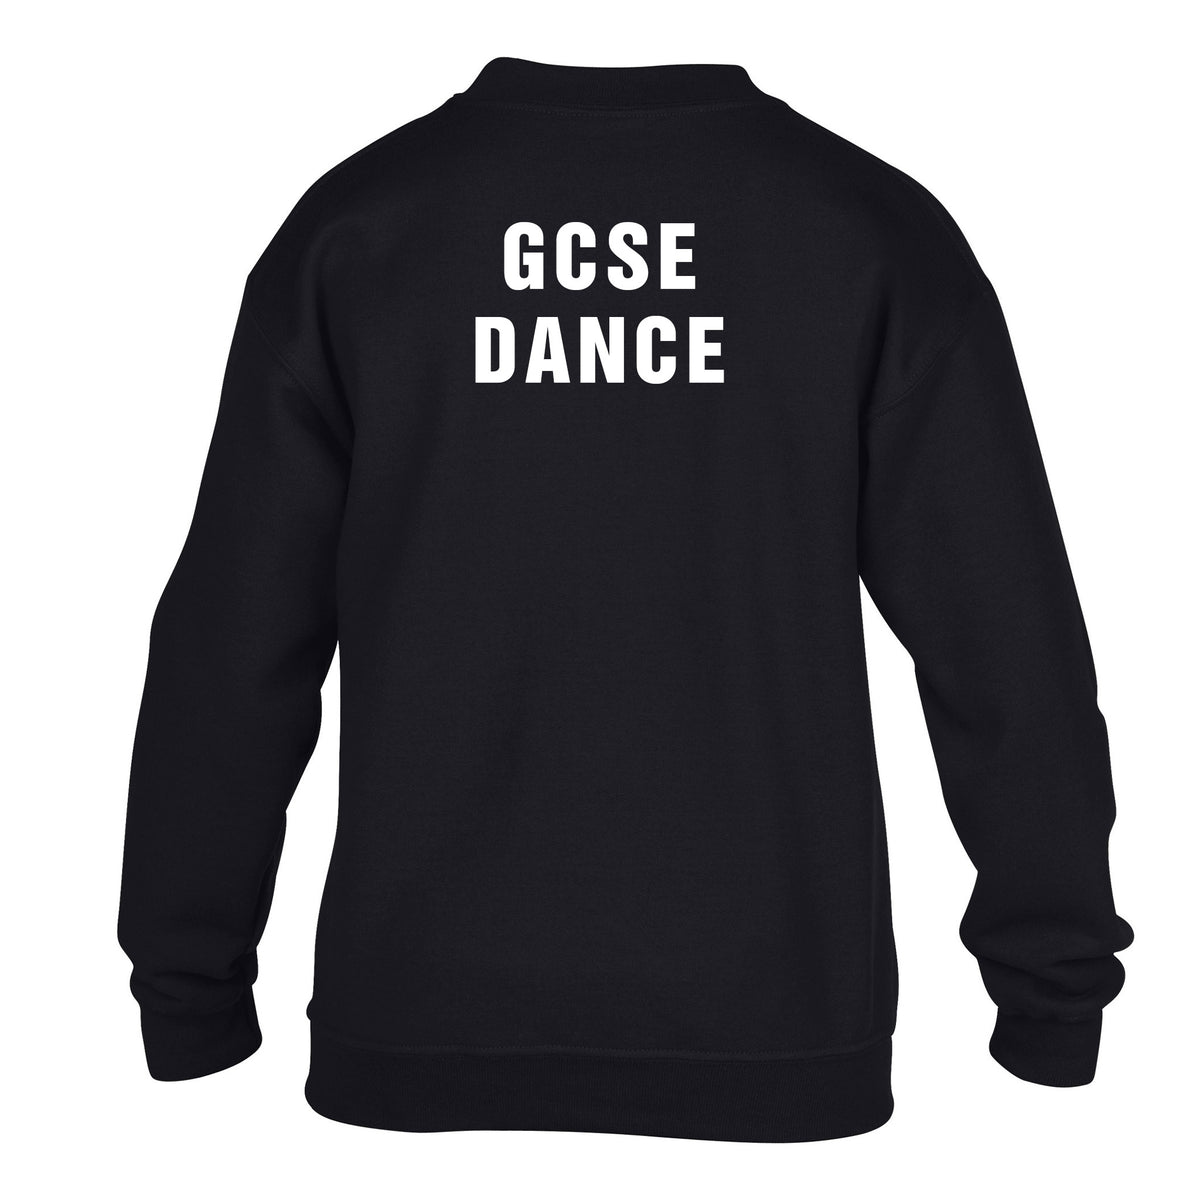 Sir William Borlase Grammar School GCSE Dance Sweatshirt